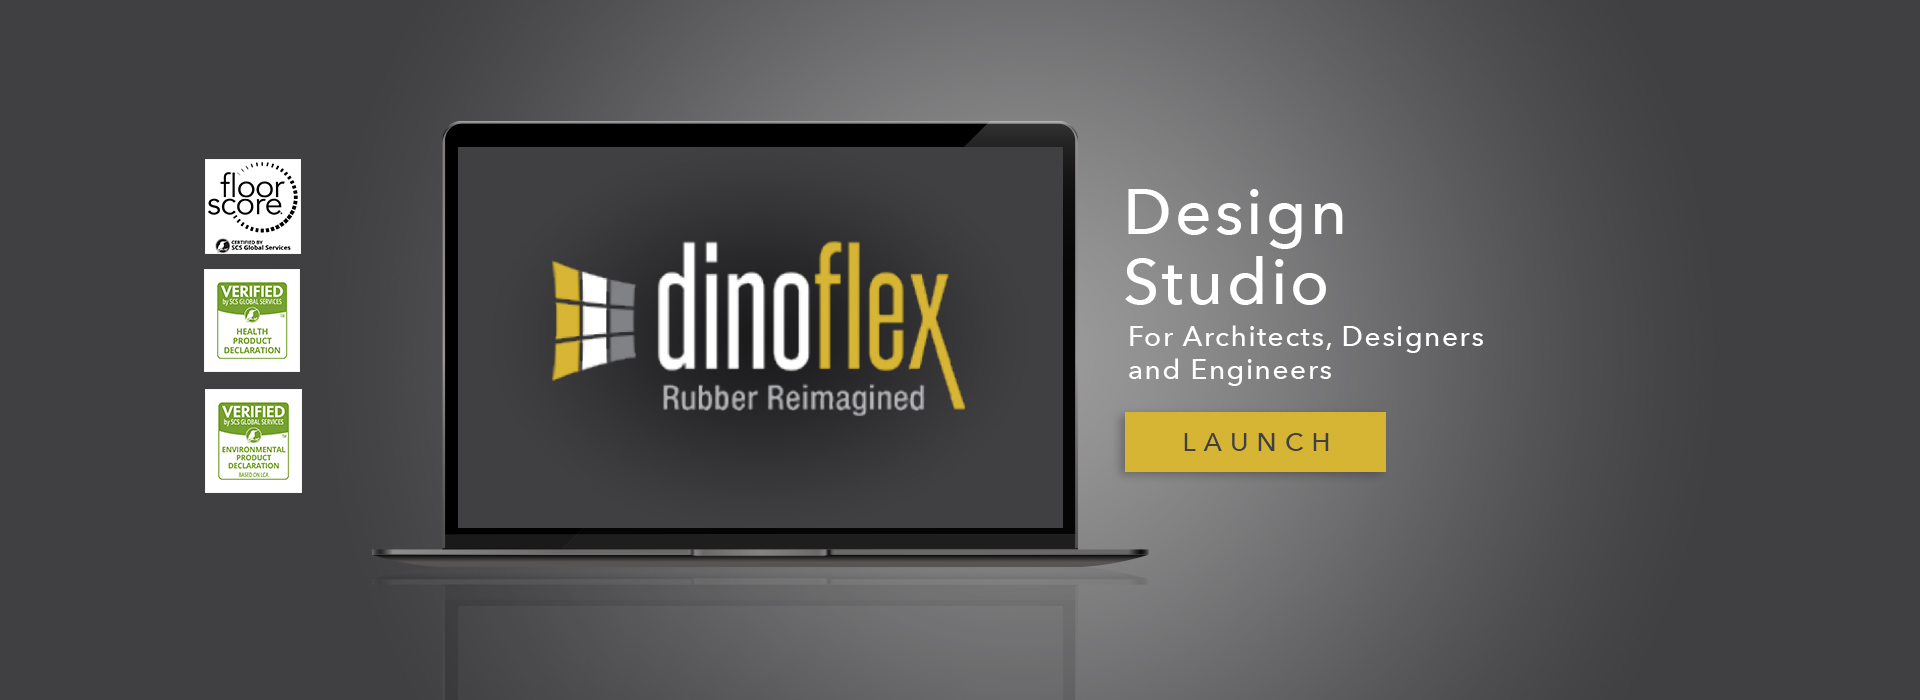 Dinoflex Launch